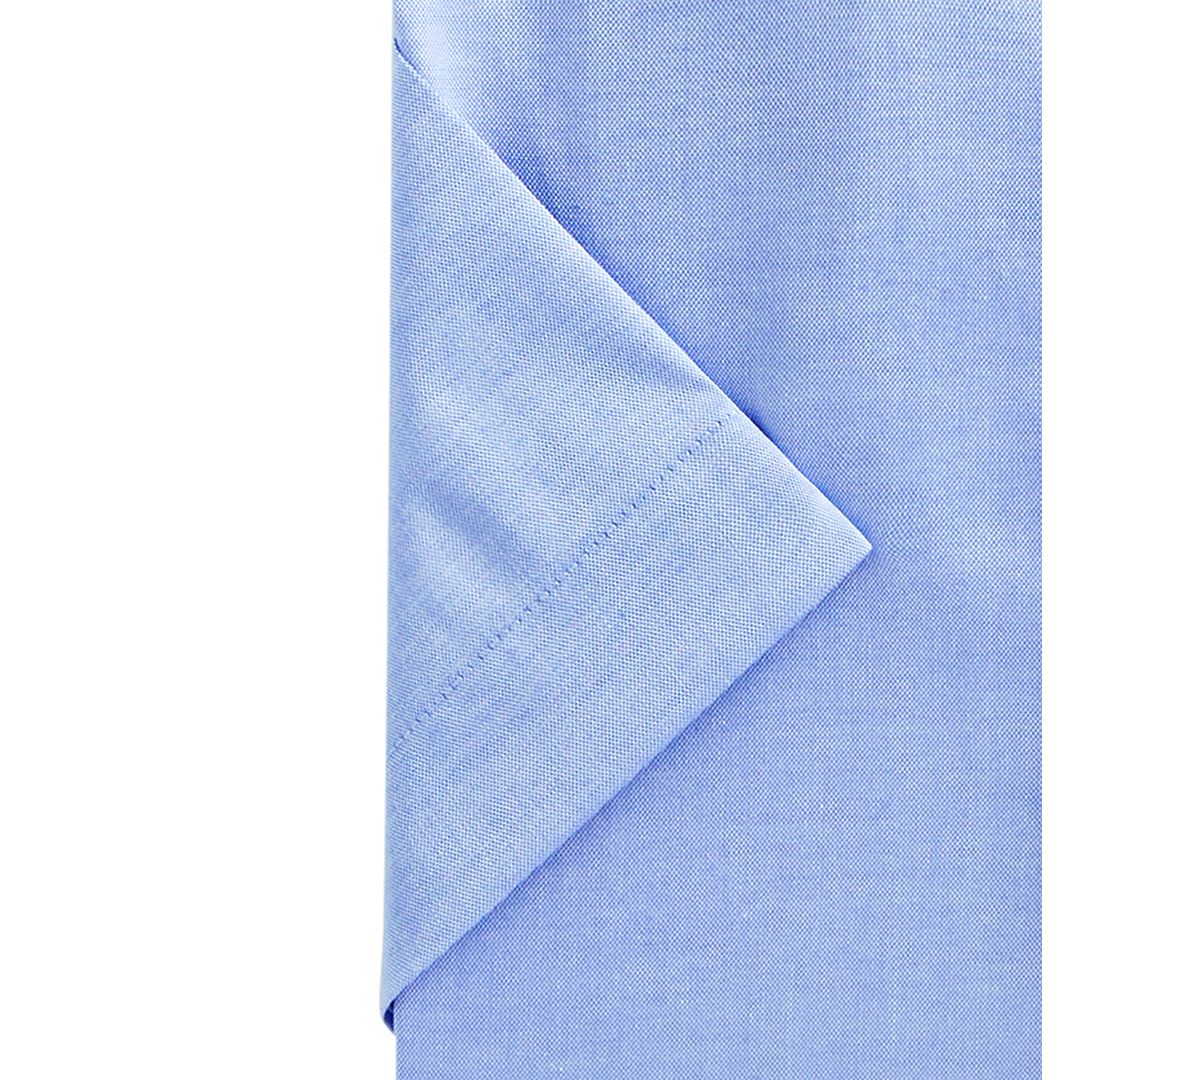 Club Room Classic/regular-fit Stretch Pinpoint Dress Shirt Light Blue